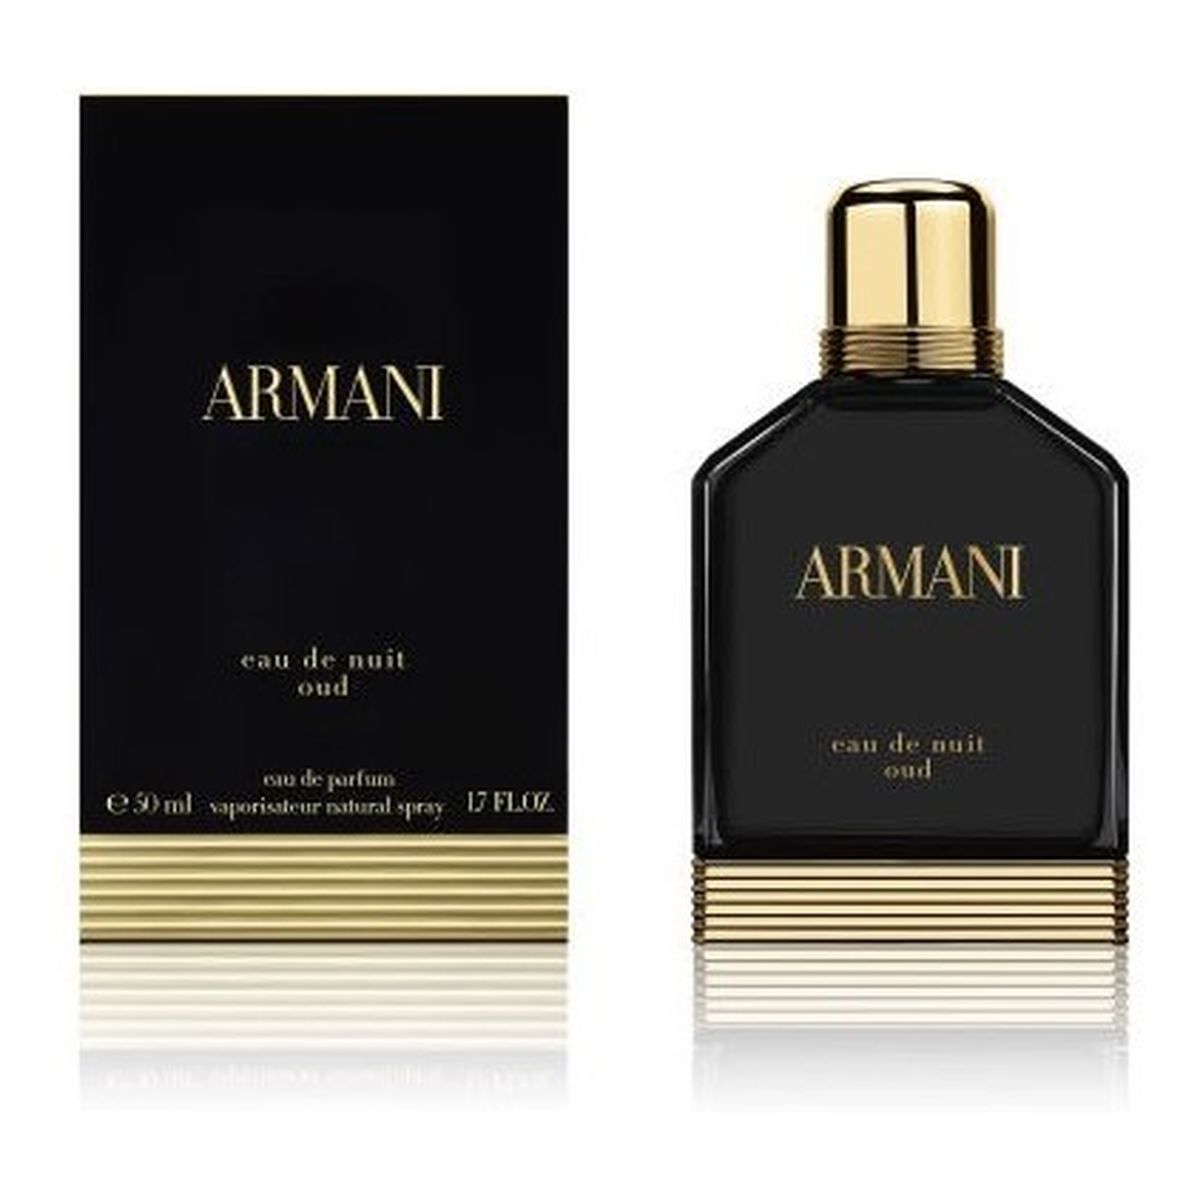 Giorgio Armani Eau De Nuit Oud Woda perfumowana spray 50ml